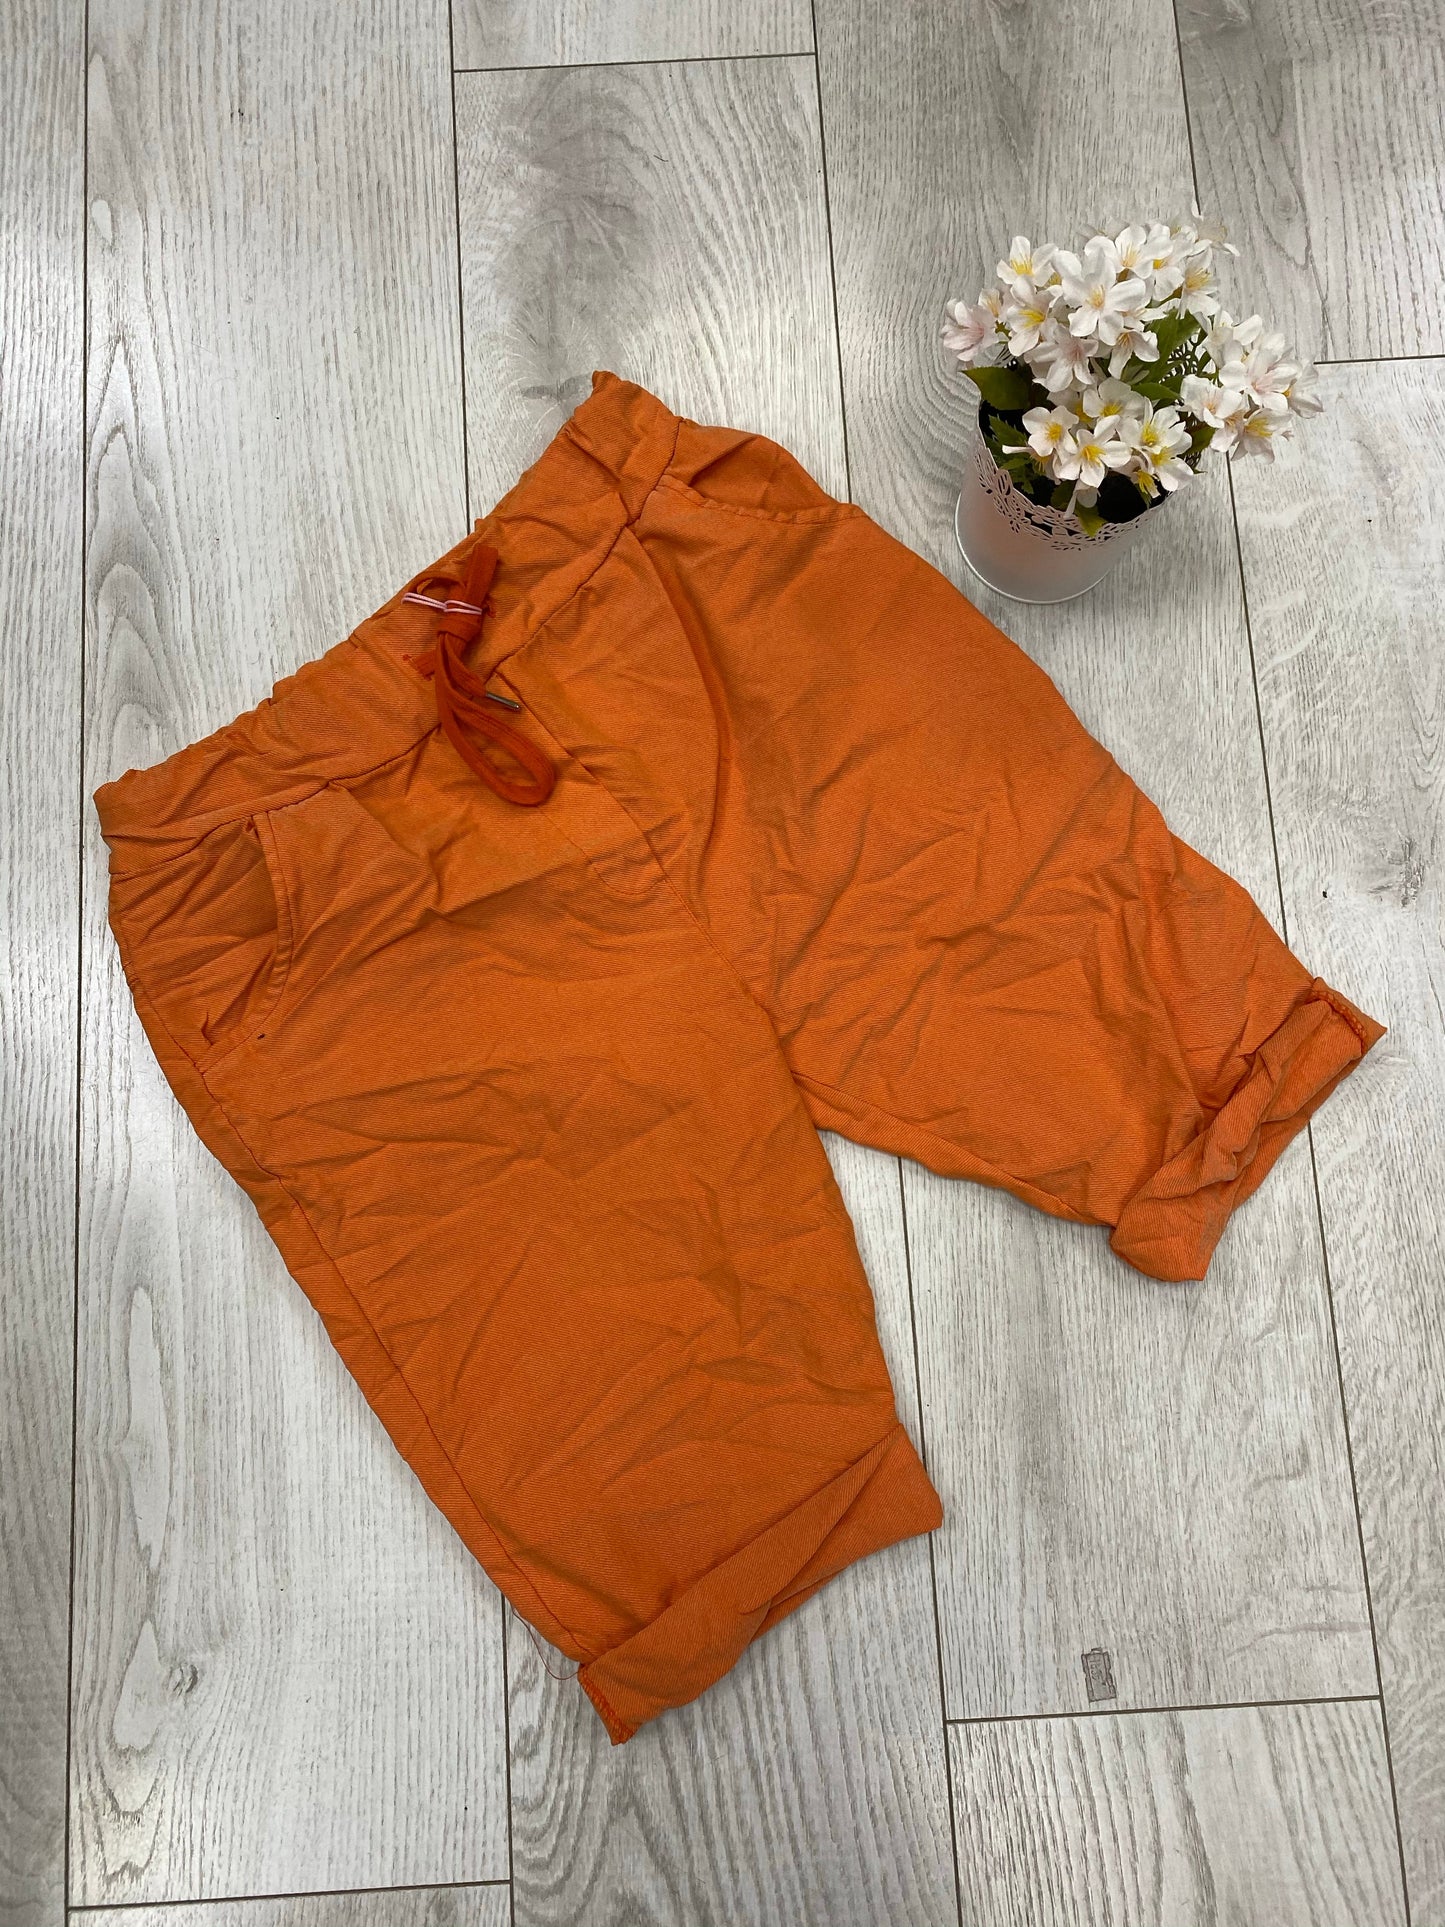 Super stretchy shorts orange 10-14